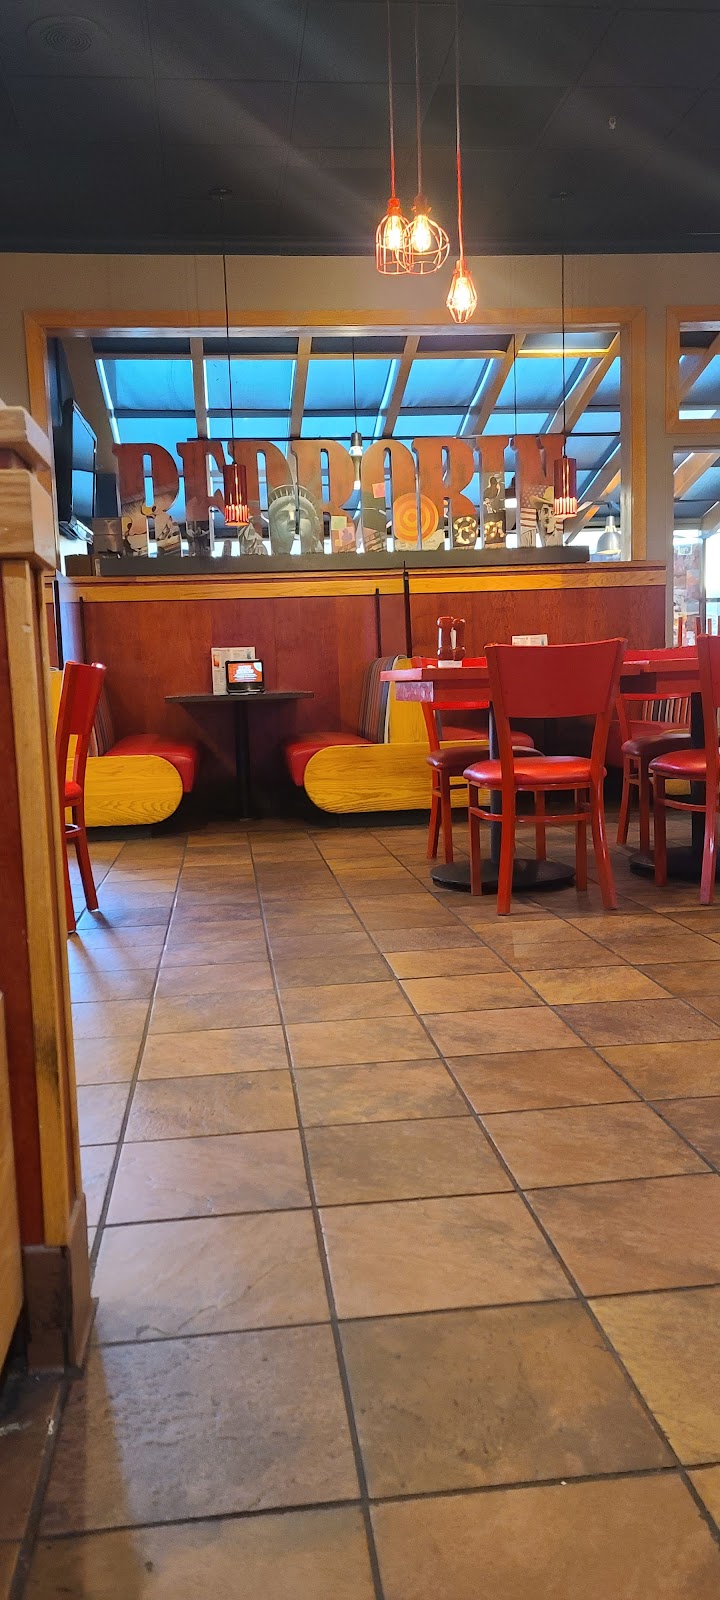 Red Robin Gourmet Burgers and Brews | 1274 El Camino Real, San Bruno, CA 94066, USA | Phone: (650) 588-4600